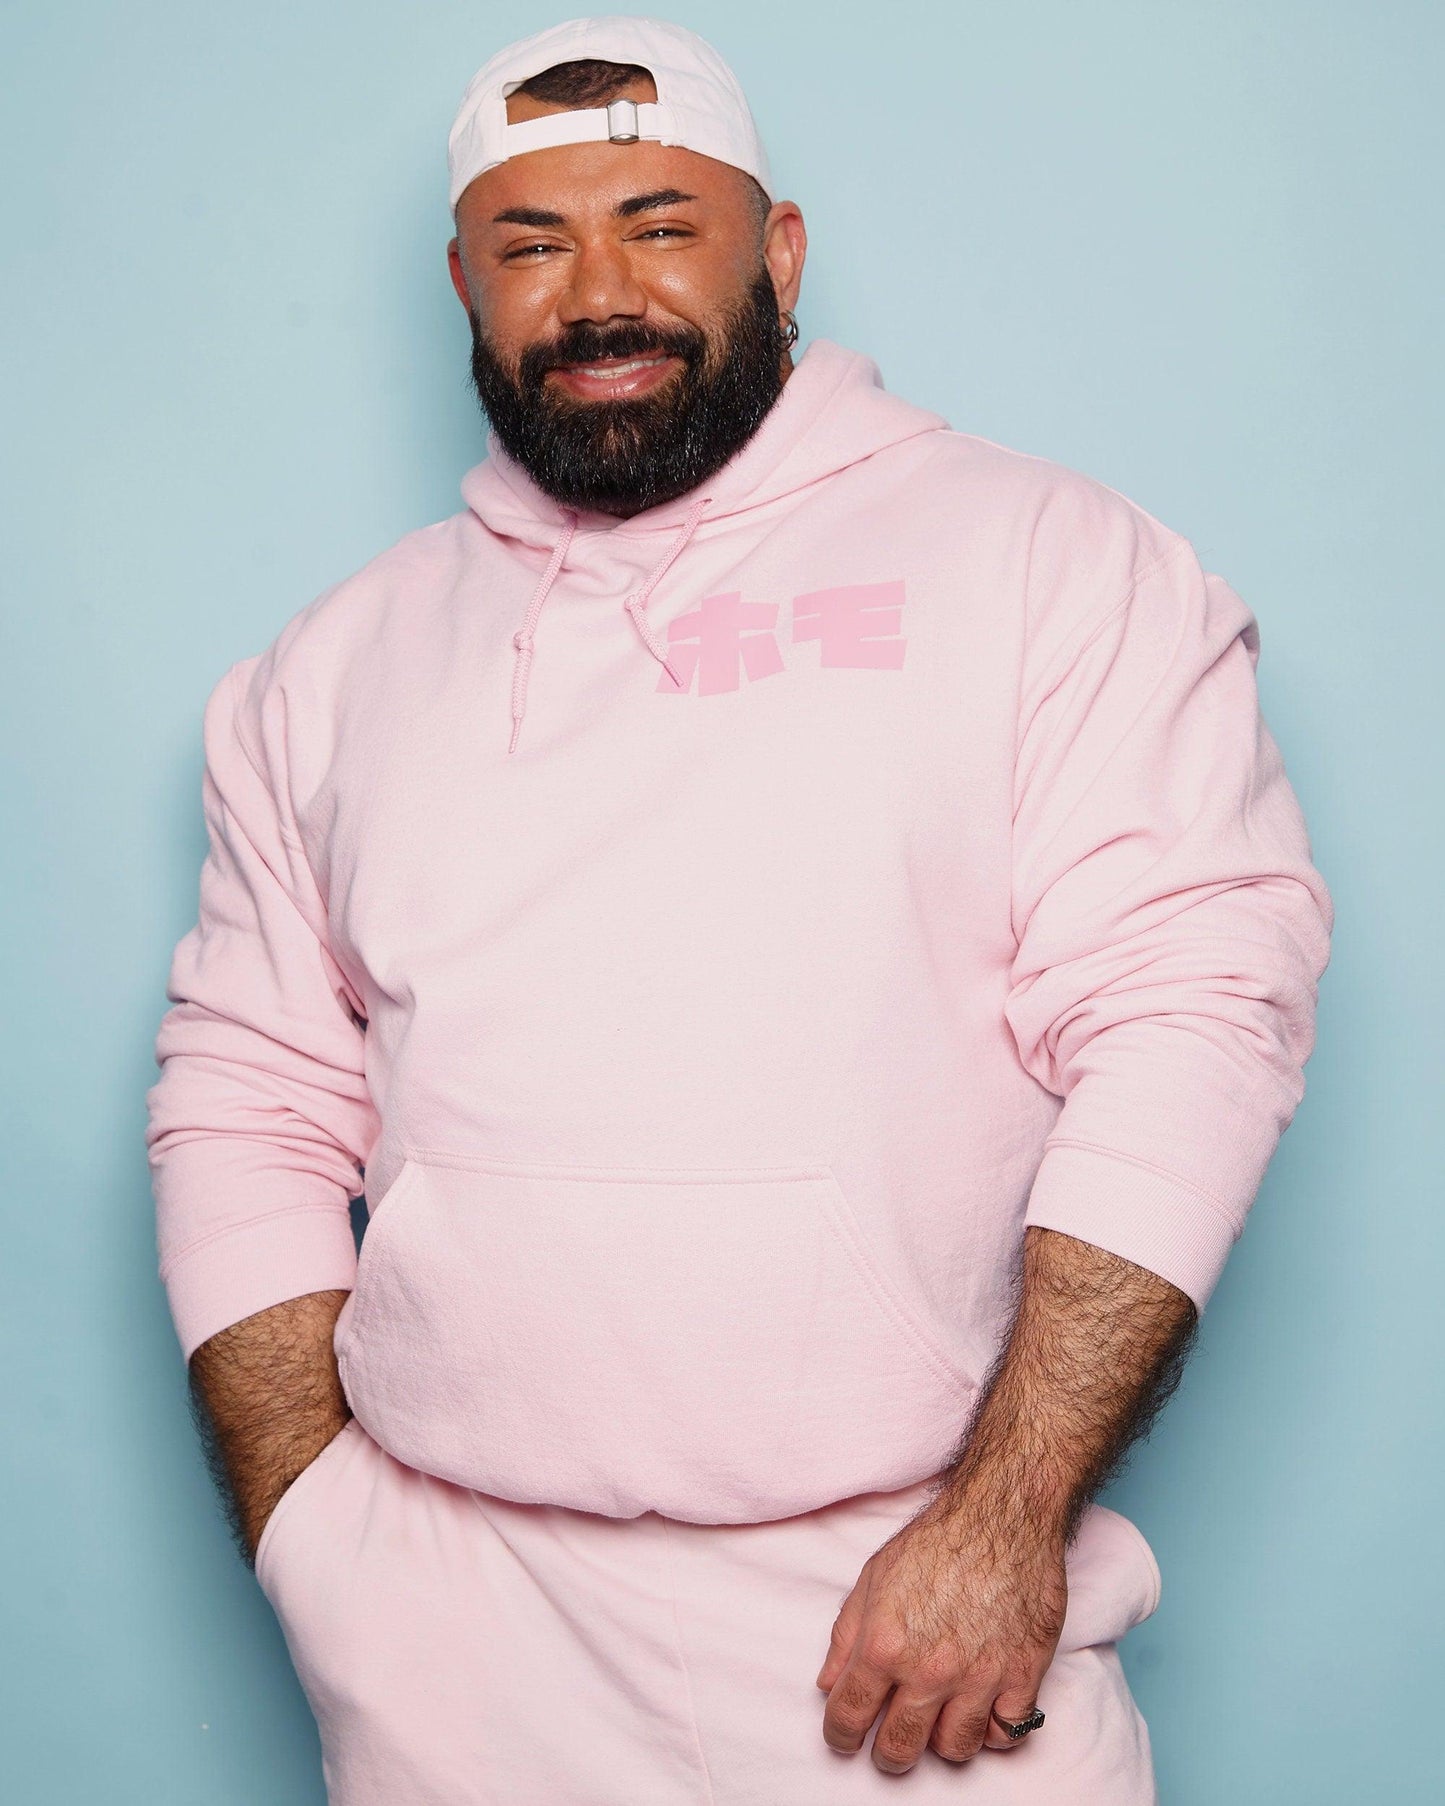 HOMO In Japanese, Pink on Pink - pullover hoodie